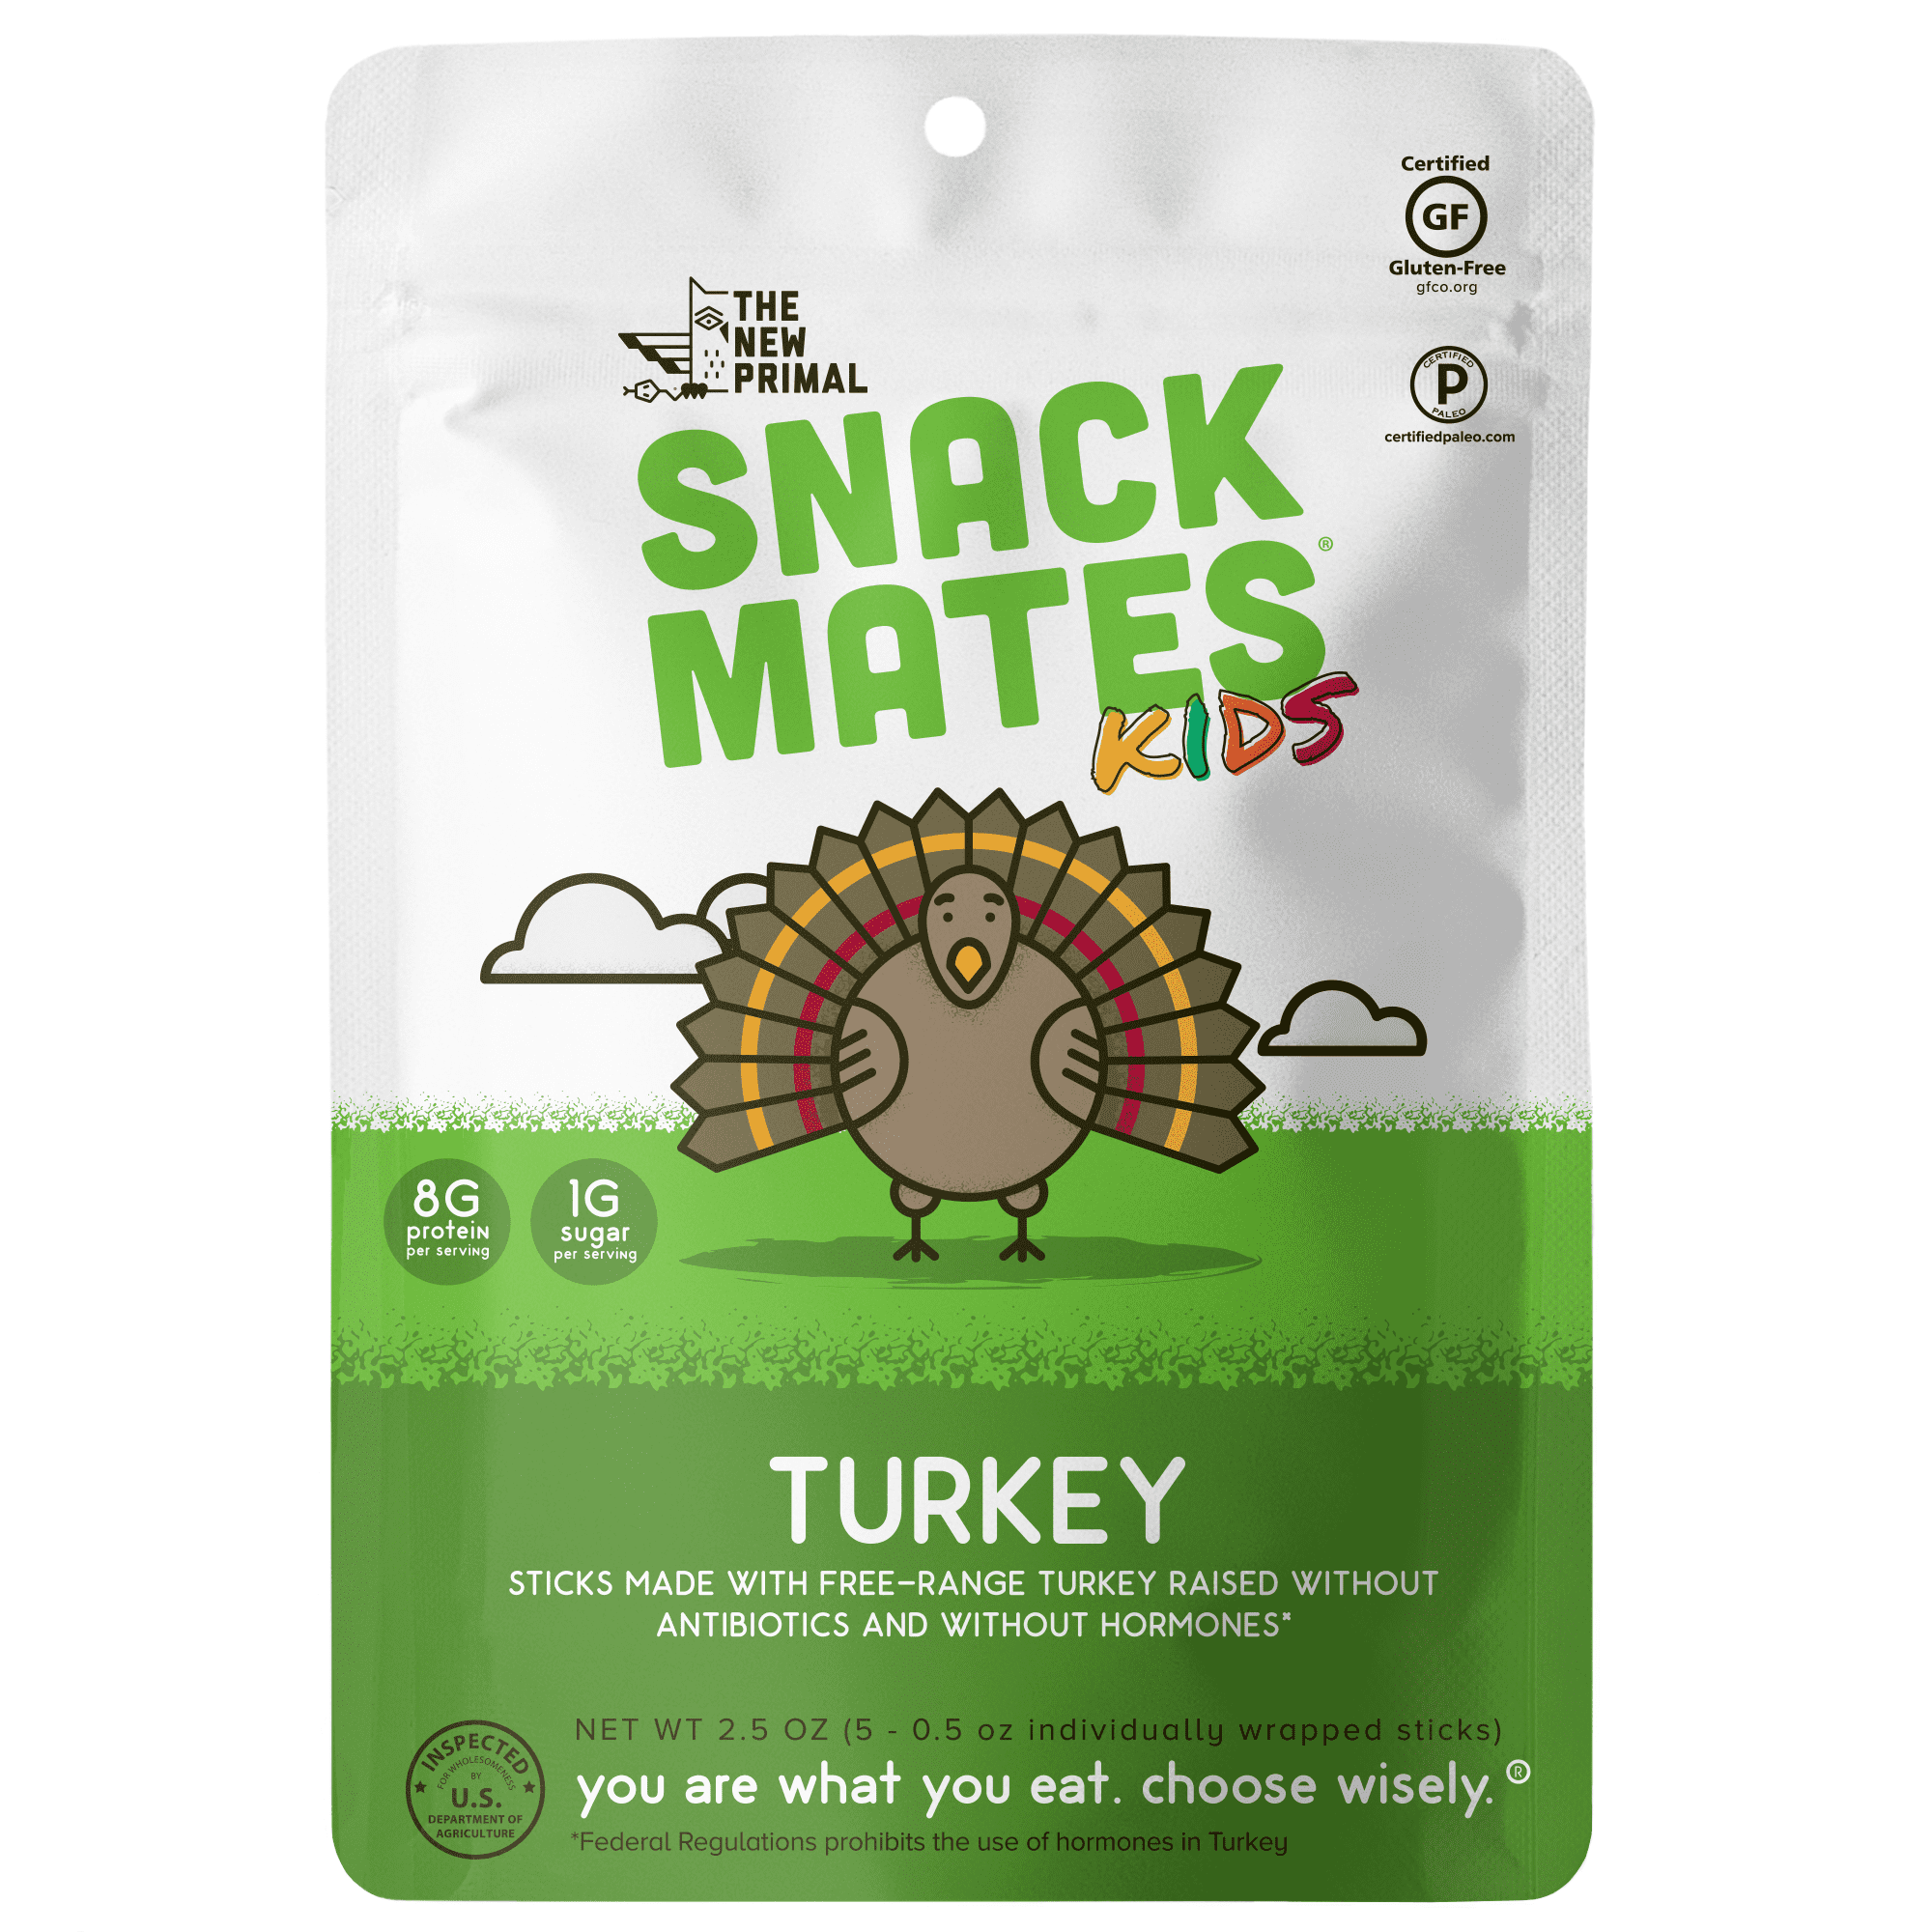 The New Primal Snack Mates - Free Range Turkey Sticks for Kids, Pack of